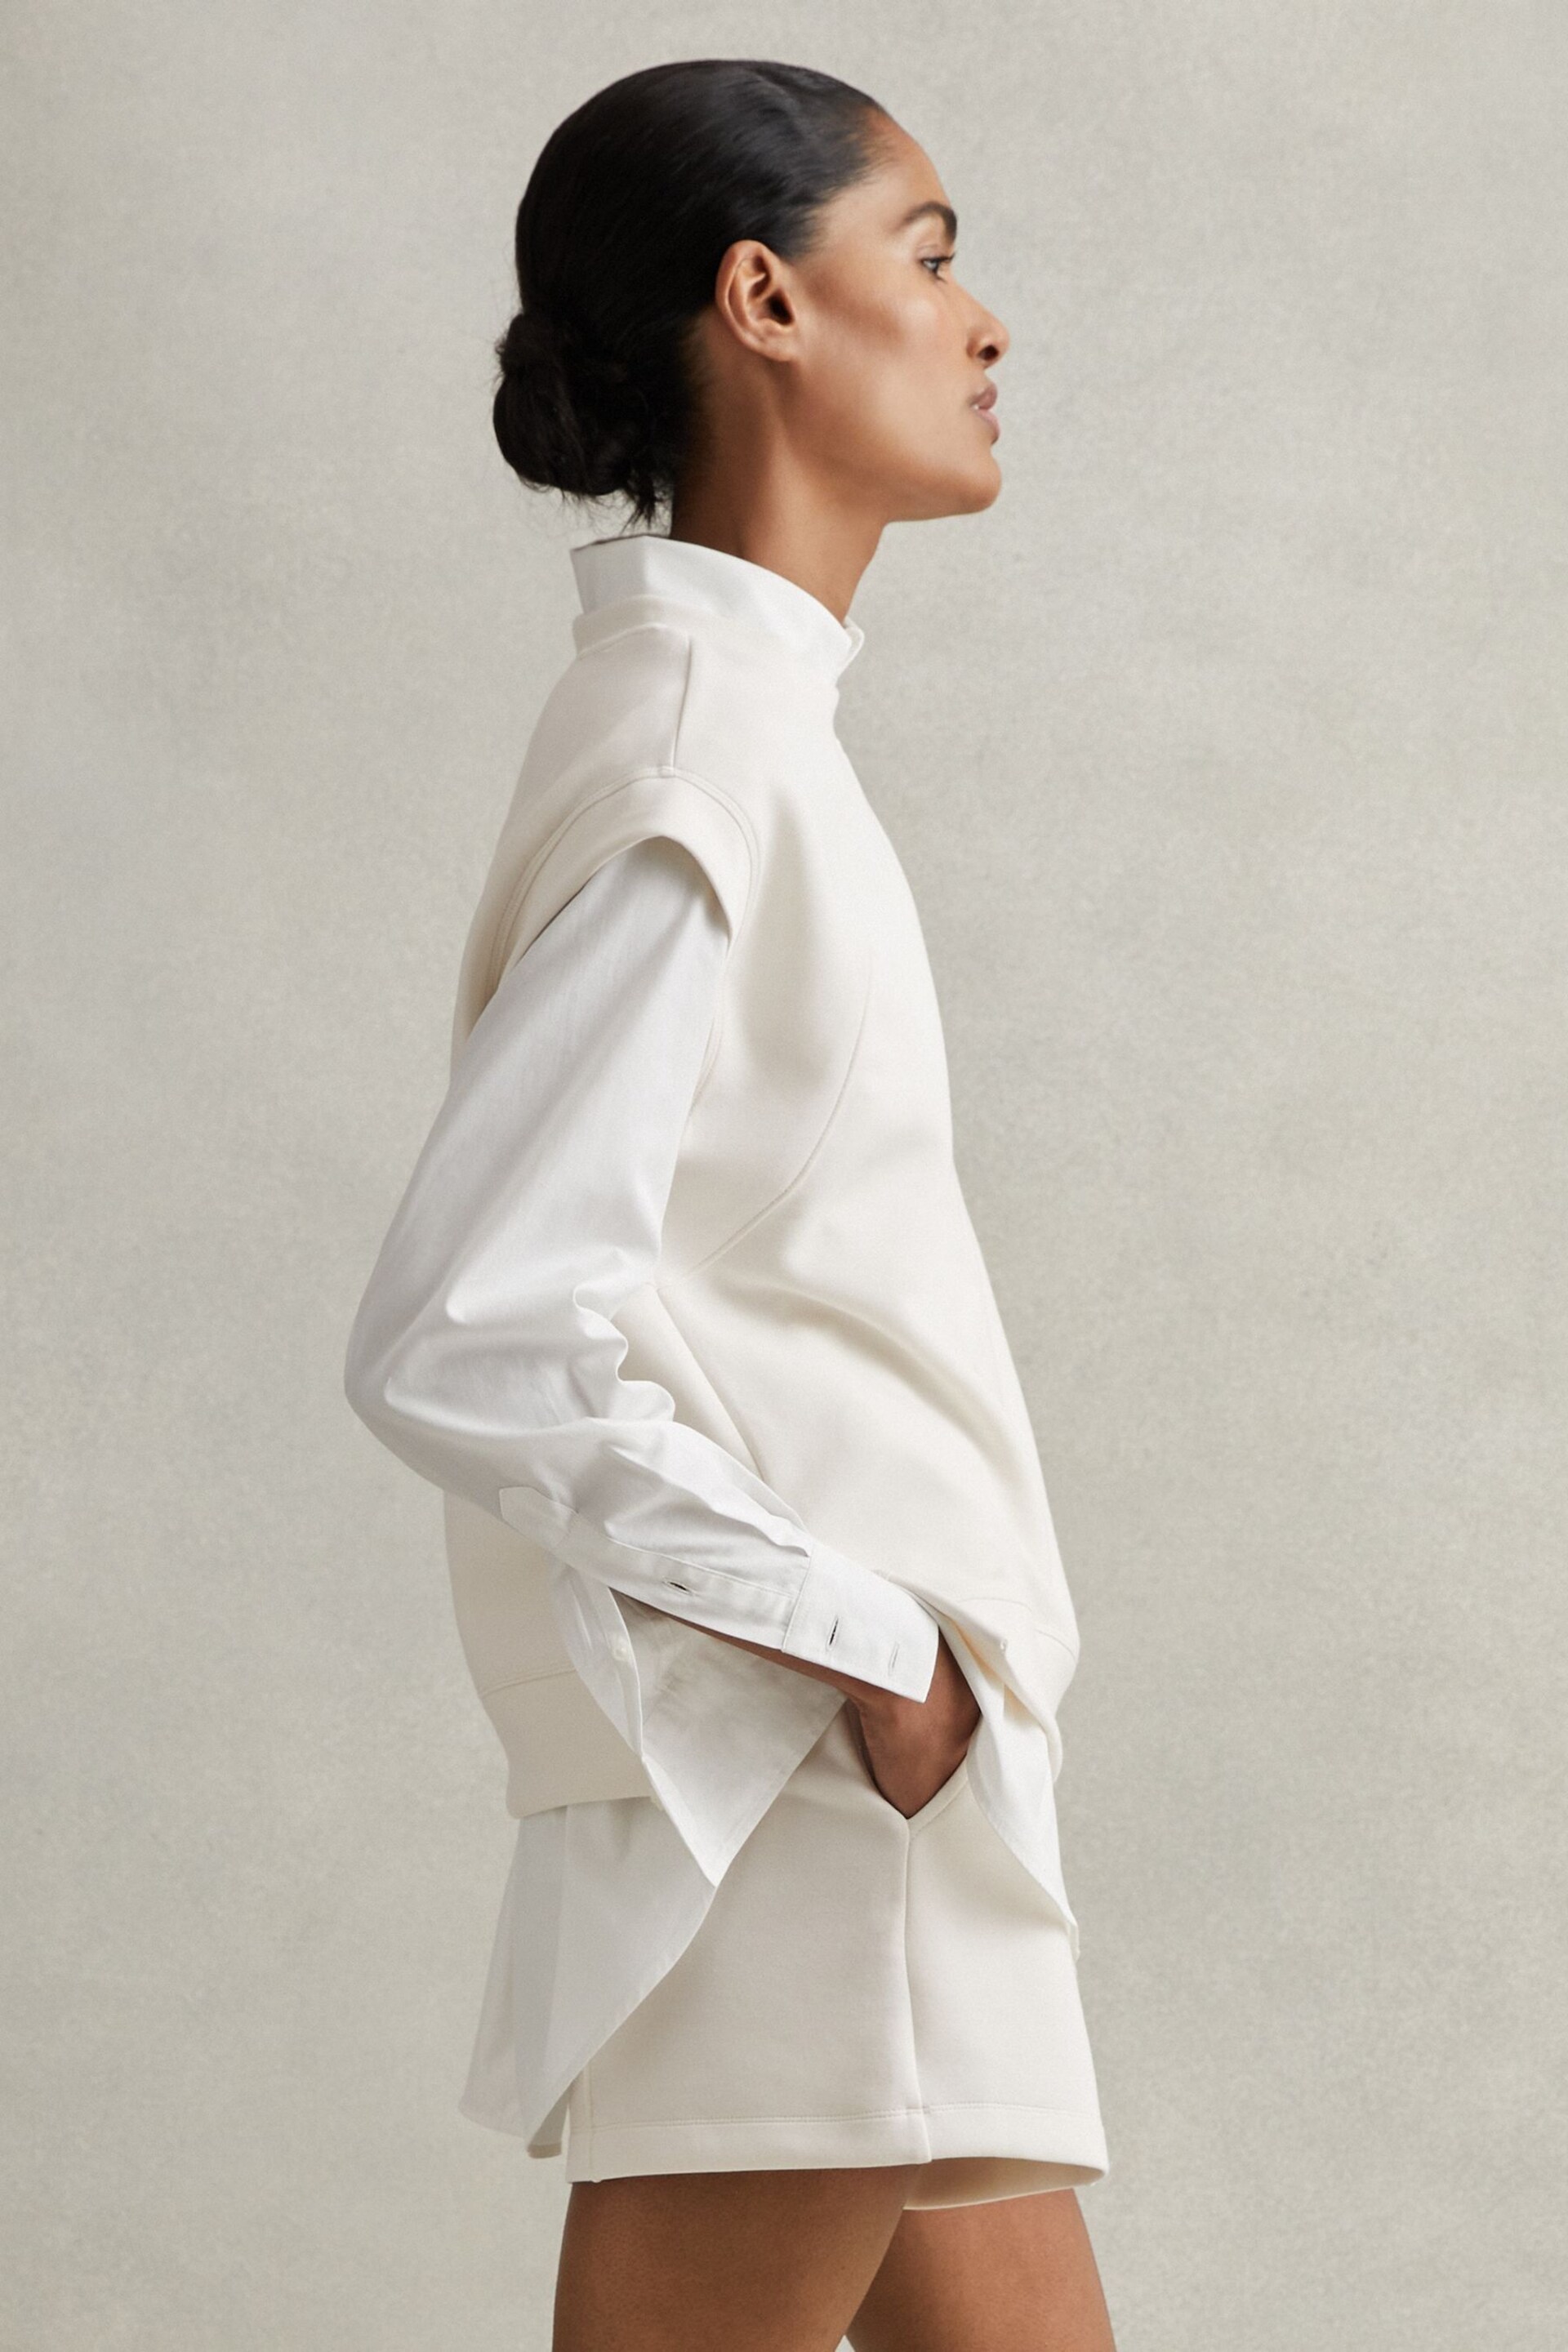 Reiss Ivory Joanna Modal Blend Co-Ord Sweatshirt - Image 5 of 7